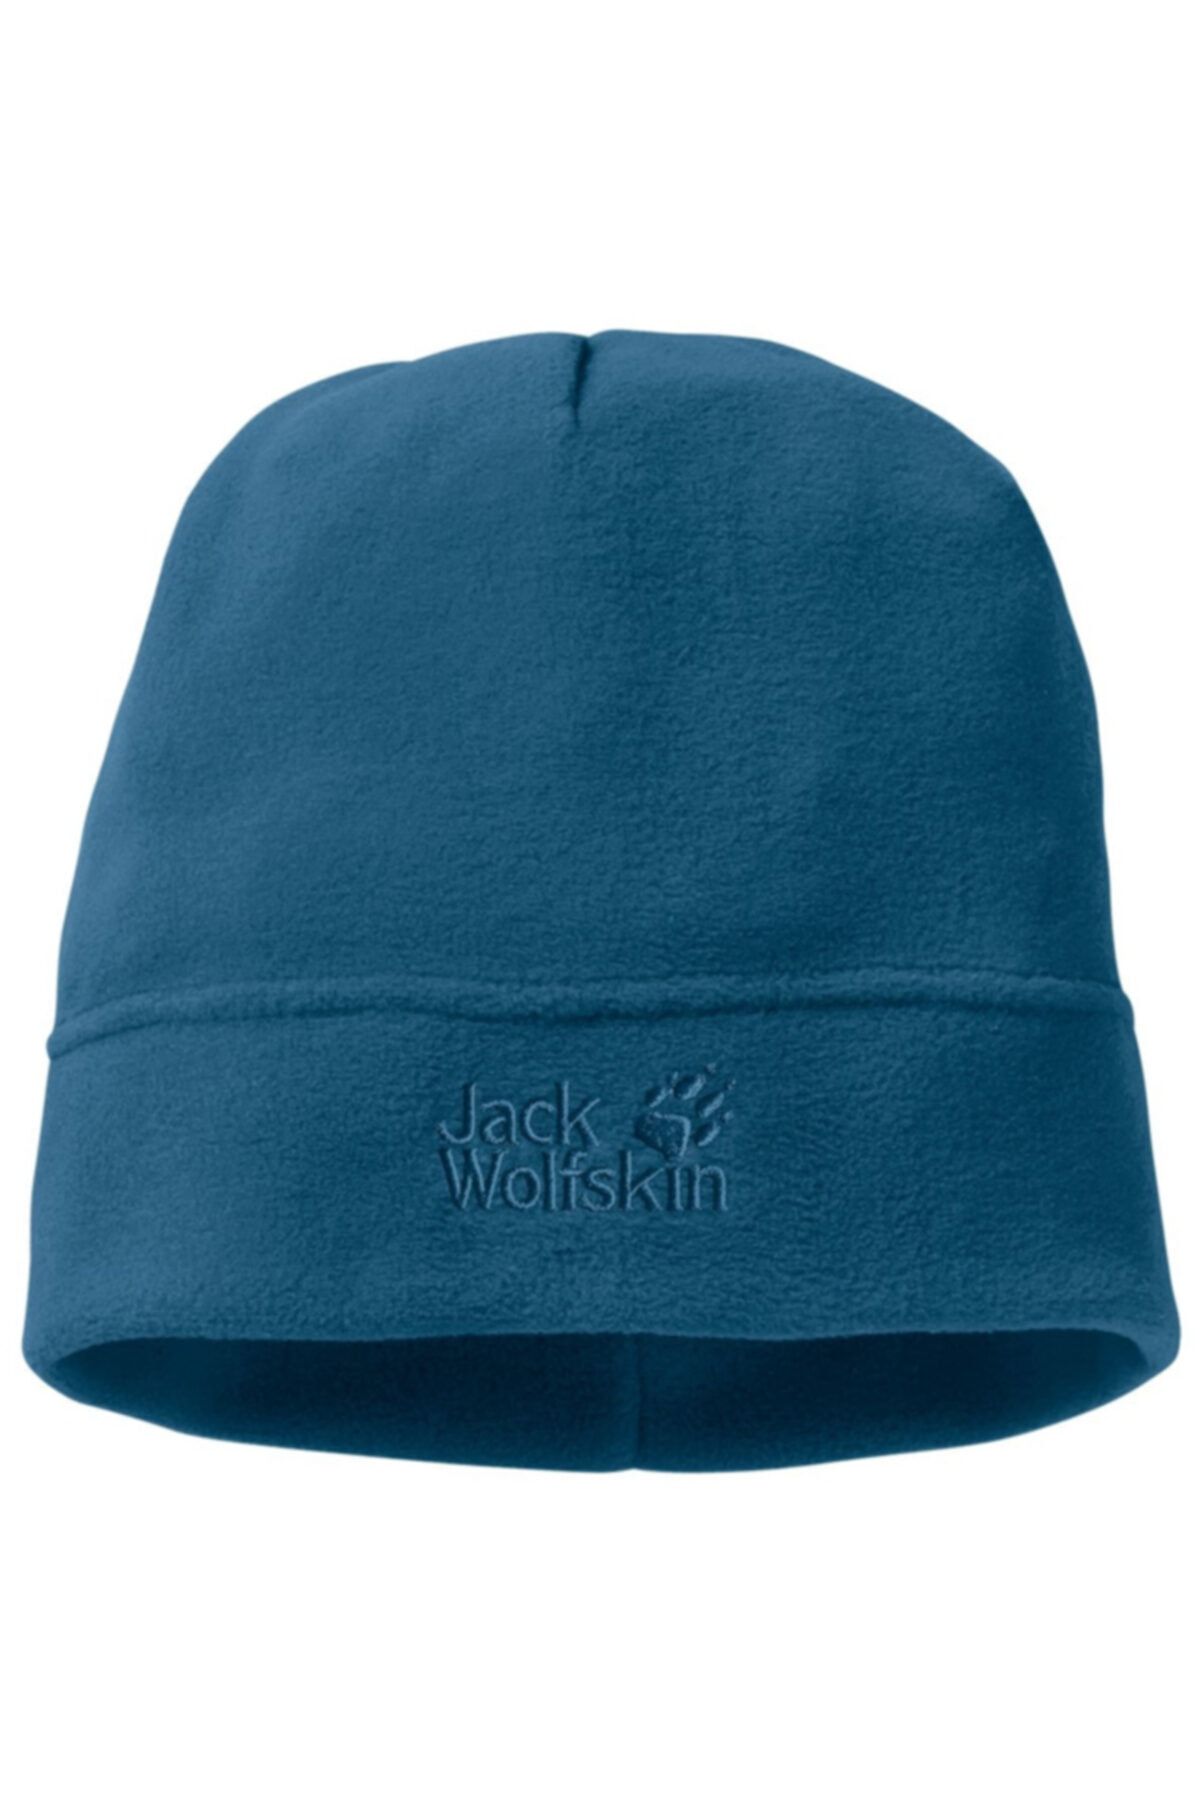 Jack Wolfskin Real Stuff Cap Unisex Mavi Bere 1909851-1350